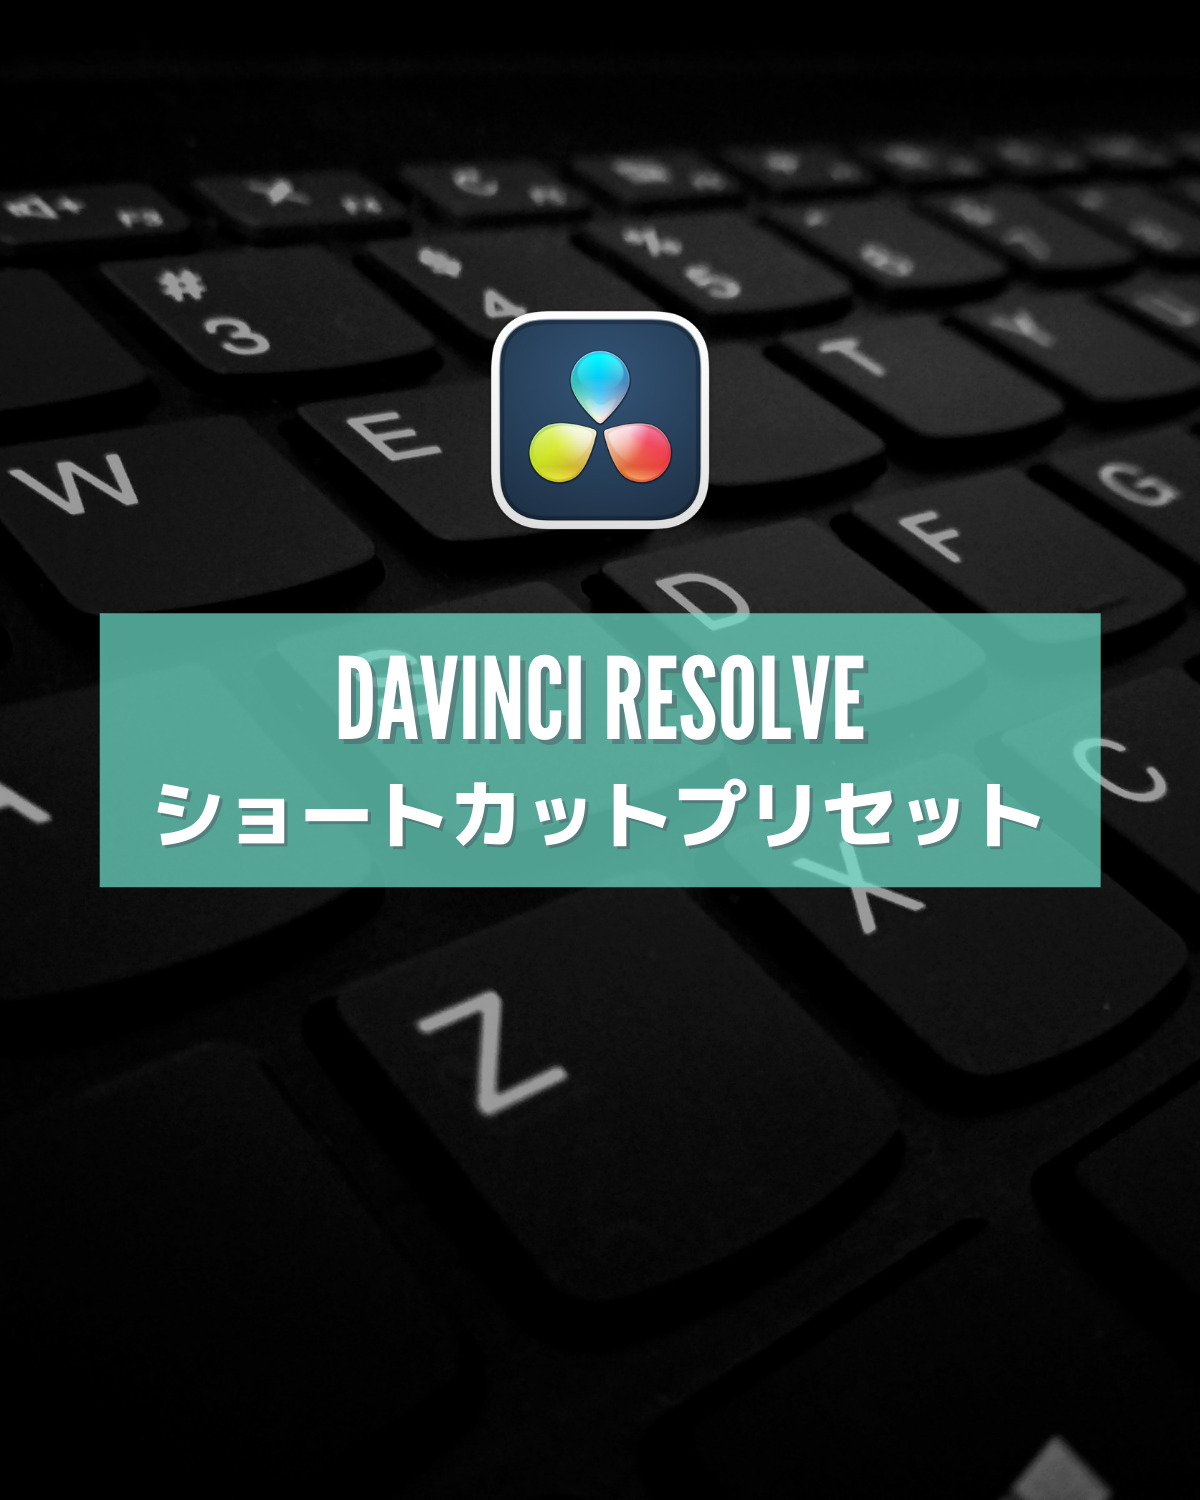 「【DaVinci Resolveの使い方】便利なショートカットプリセット」のアイキャッチ画像